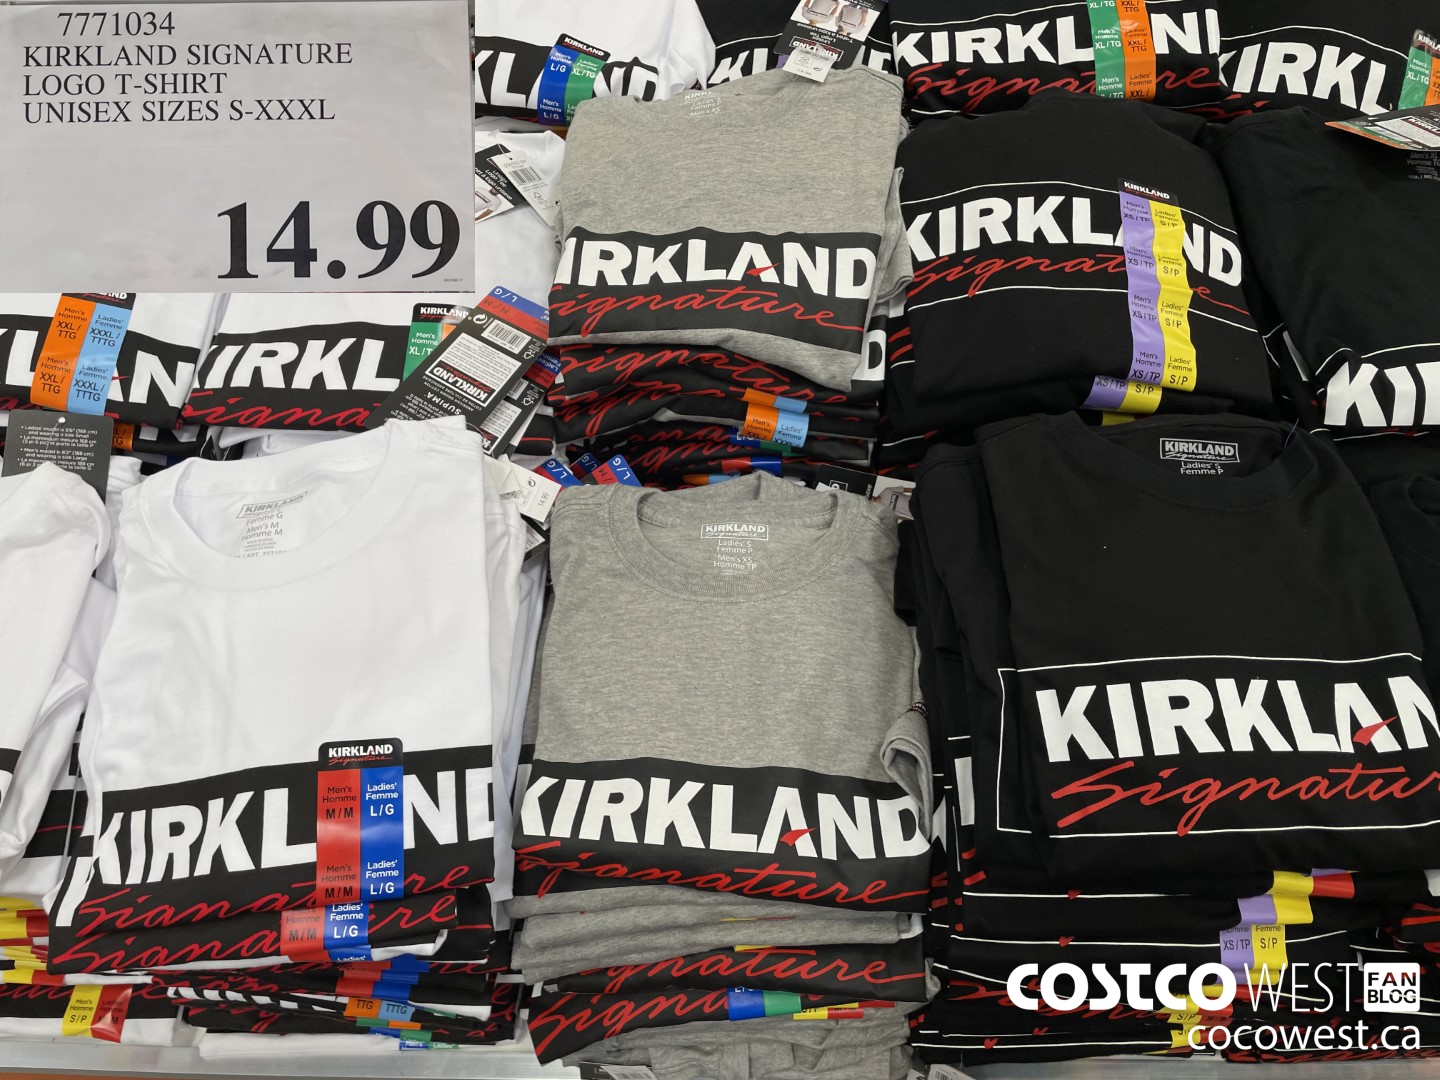 Costco] Kirkland Signature Logo T-Shirt $9.99 (33.33% off) -  RedFlagDeals.com Forums